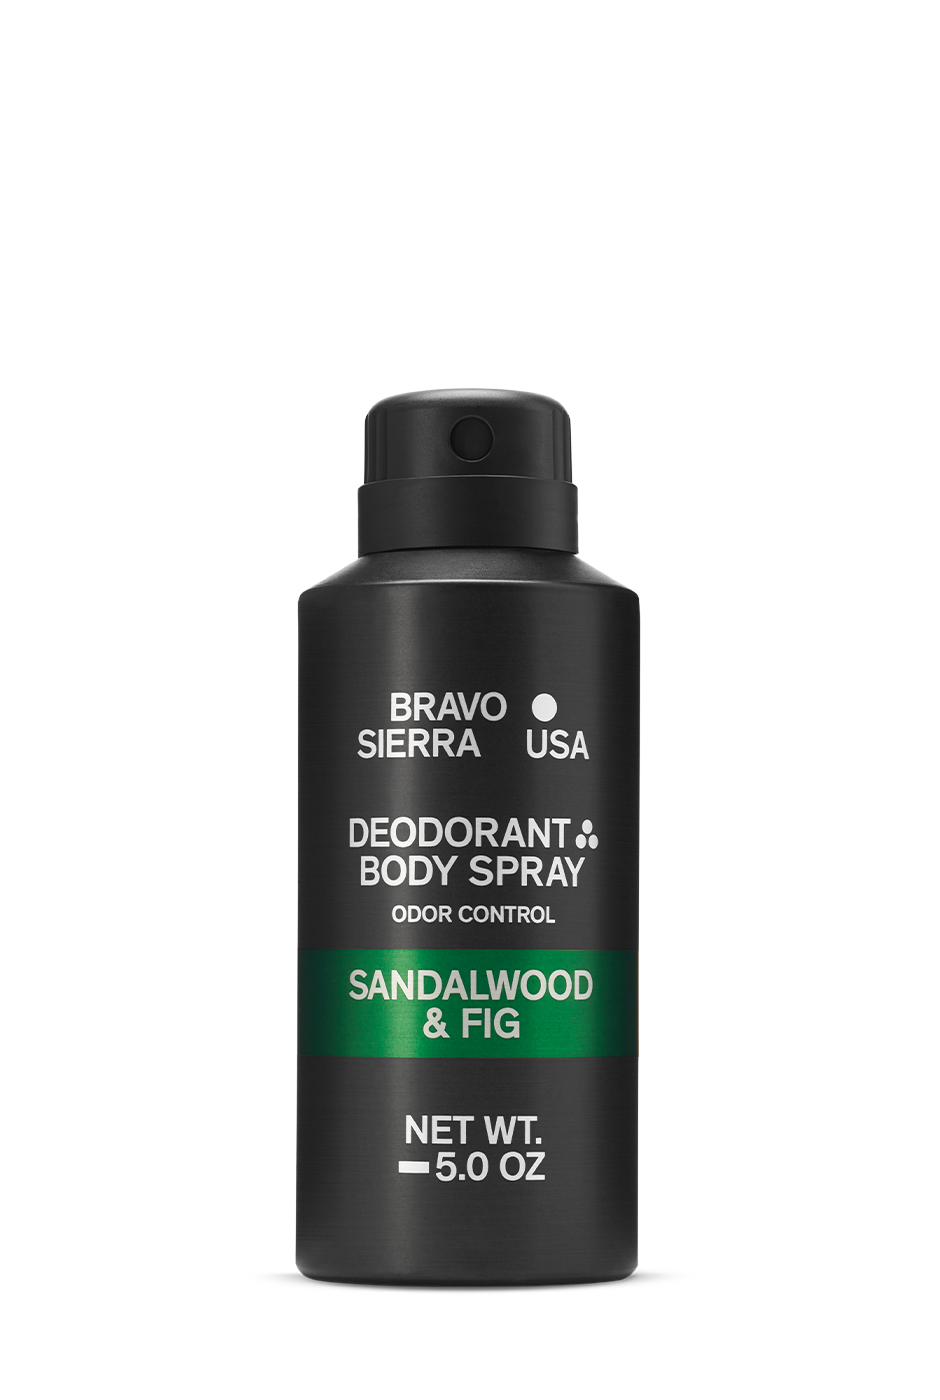 Cuba Men's Shadow Deodorant Body Spray 6.7 oz Fragrances 5425039221687 -  Fragrances & Beauty, Shadow - Jomashop